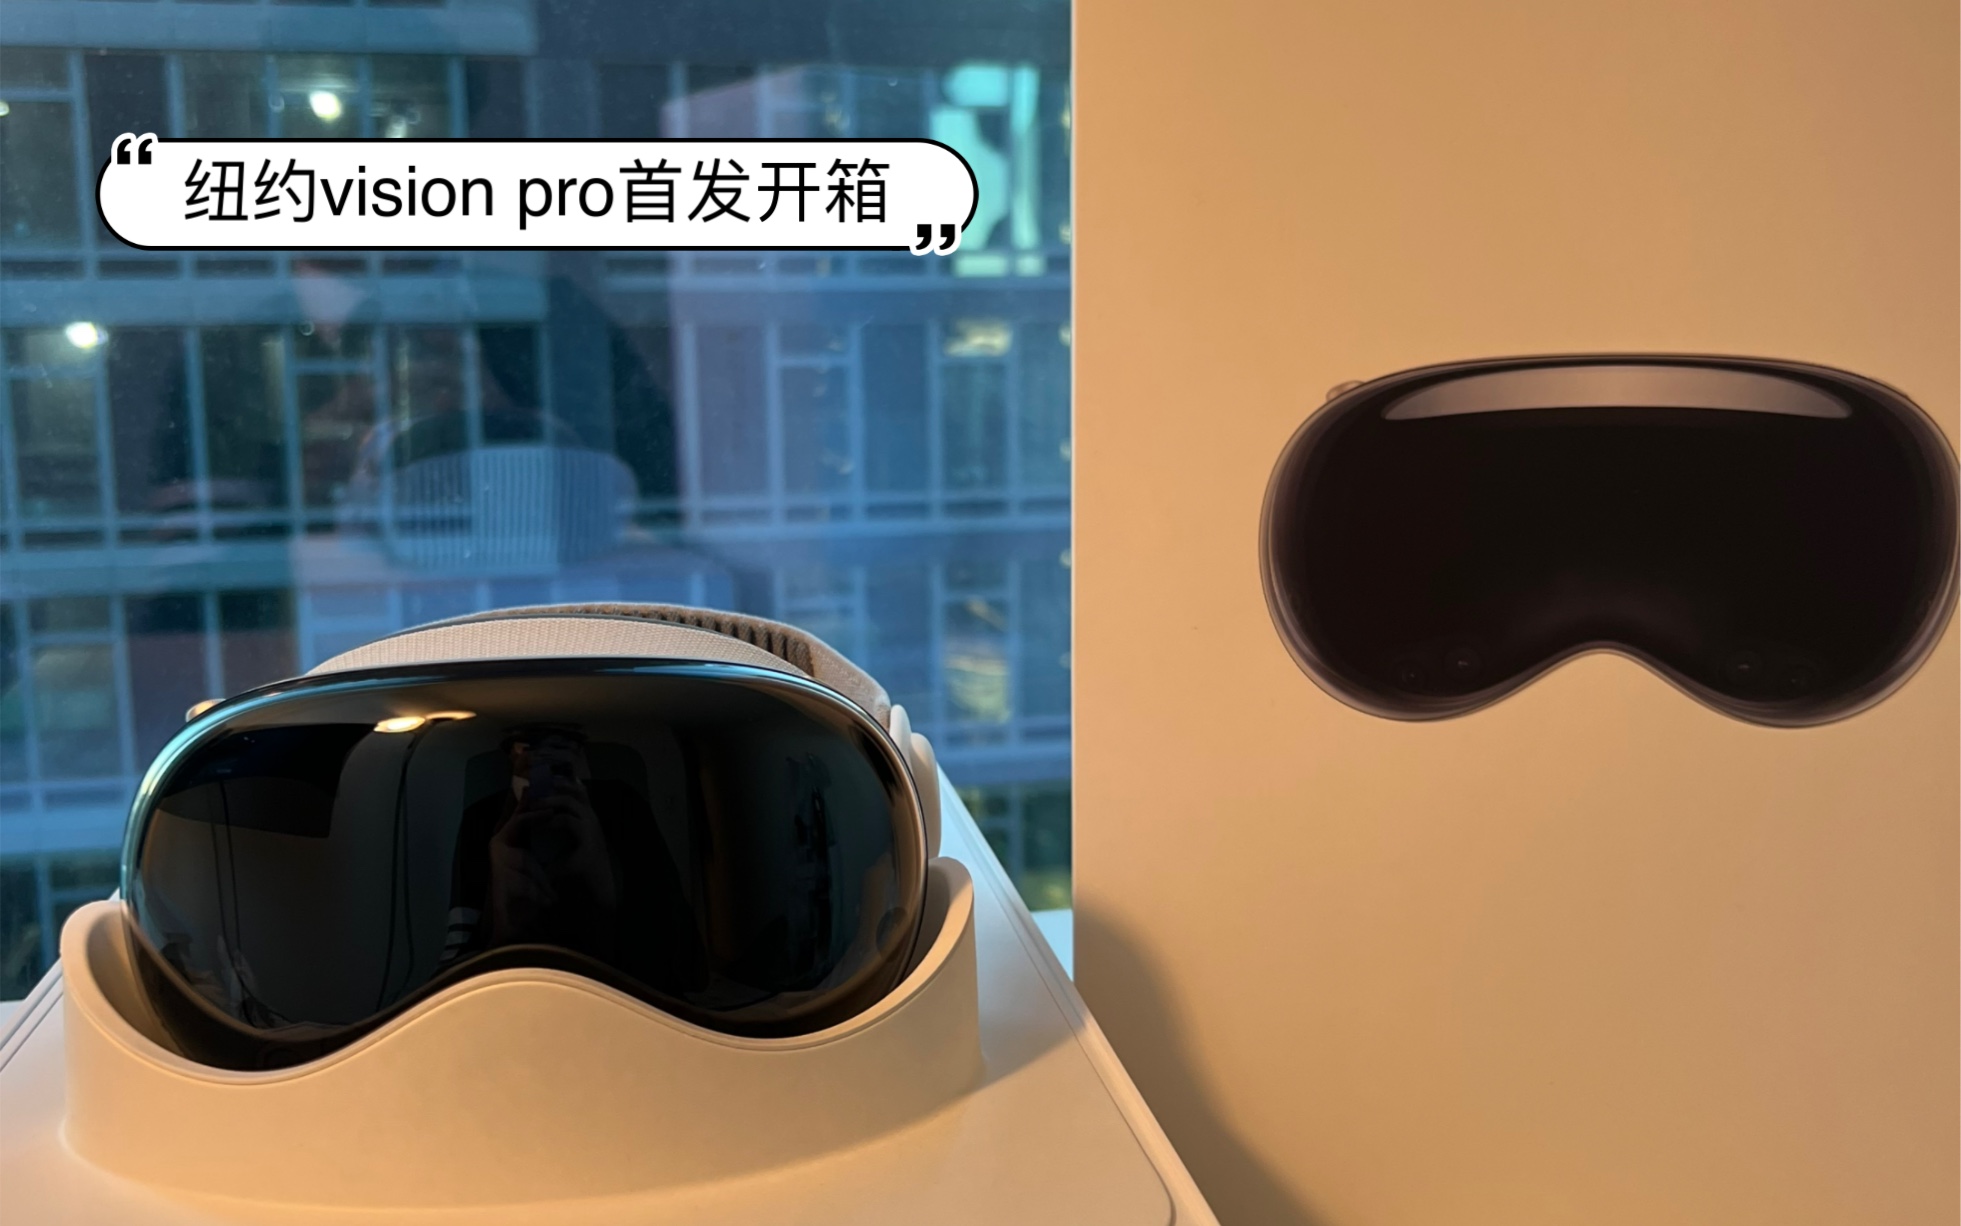 Vision Pro在“风口”上能站多久